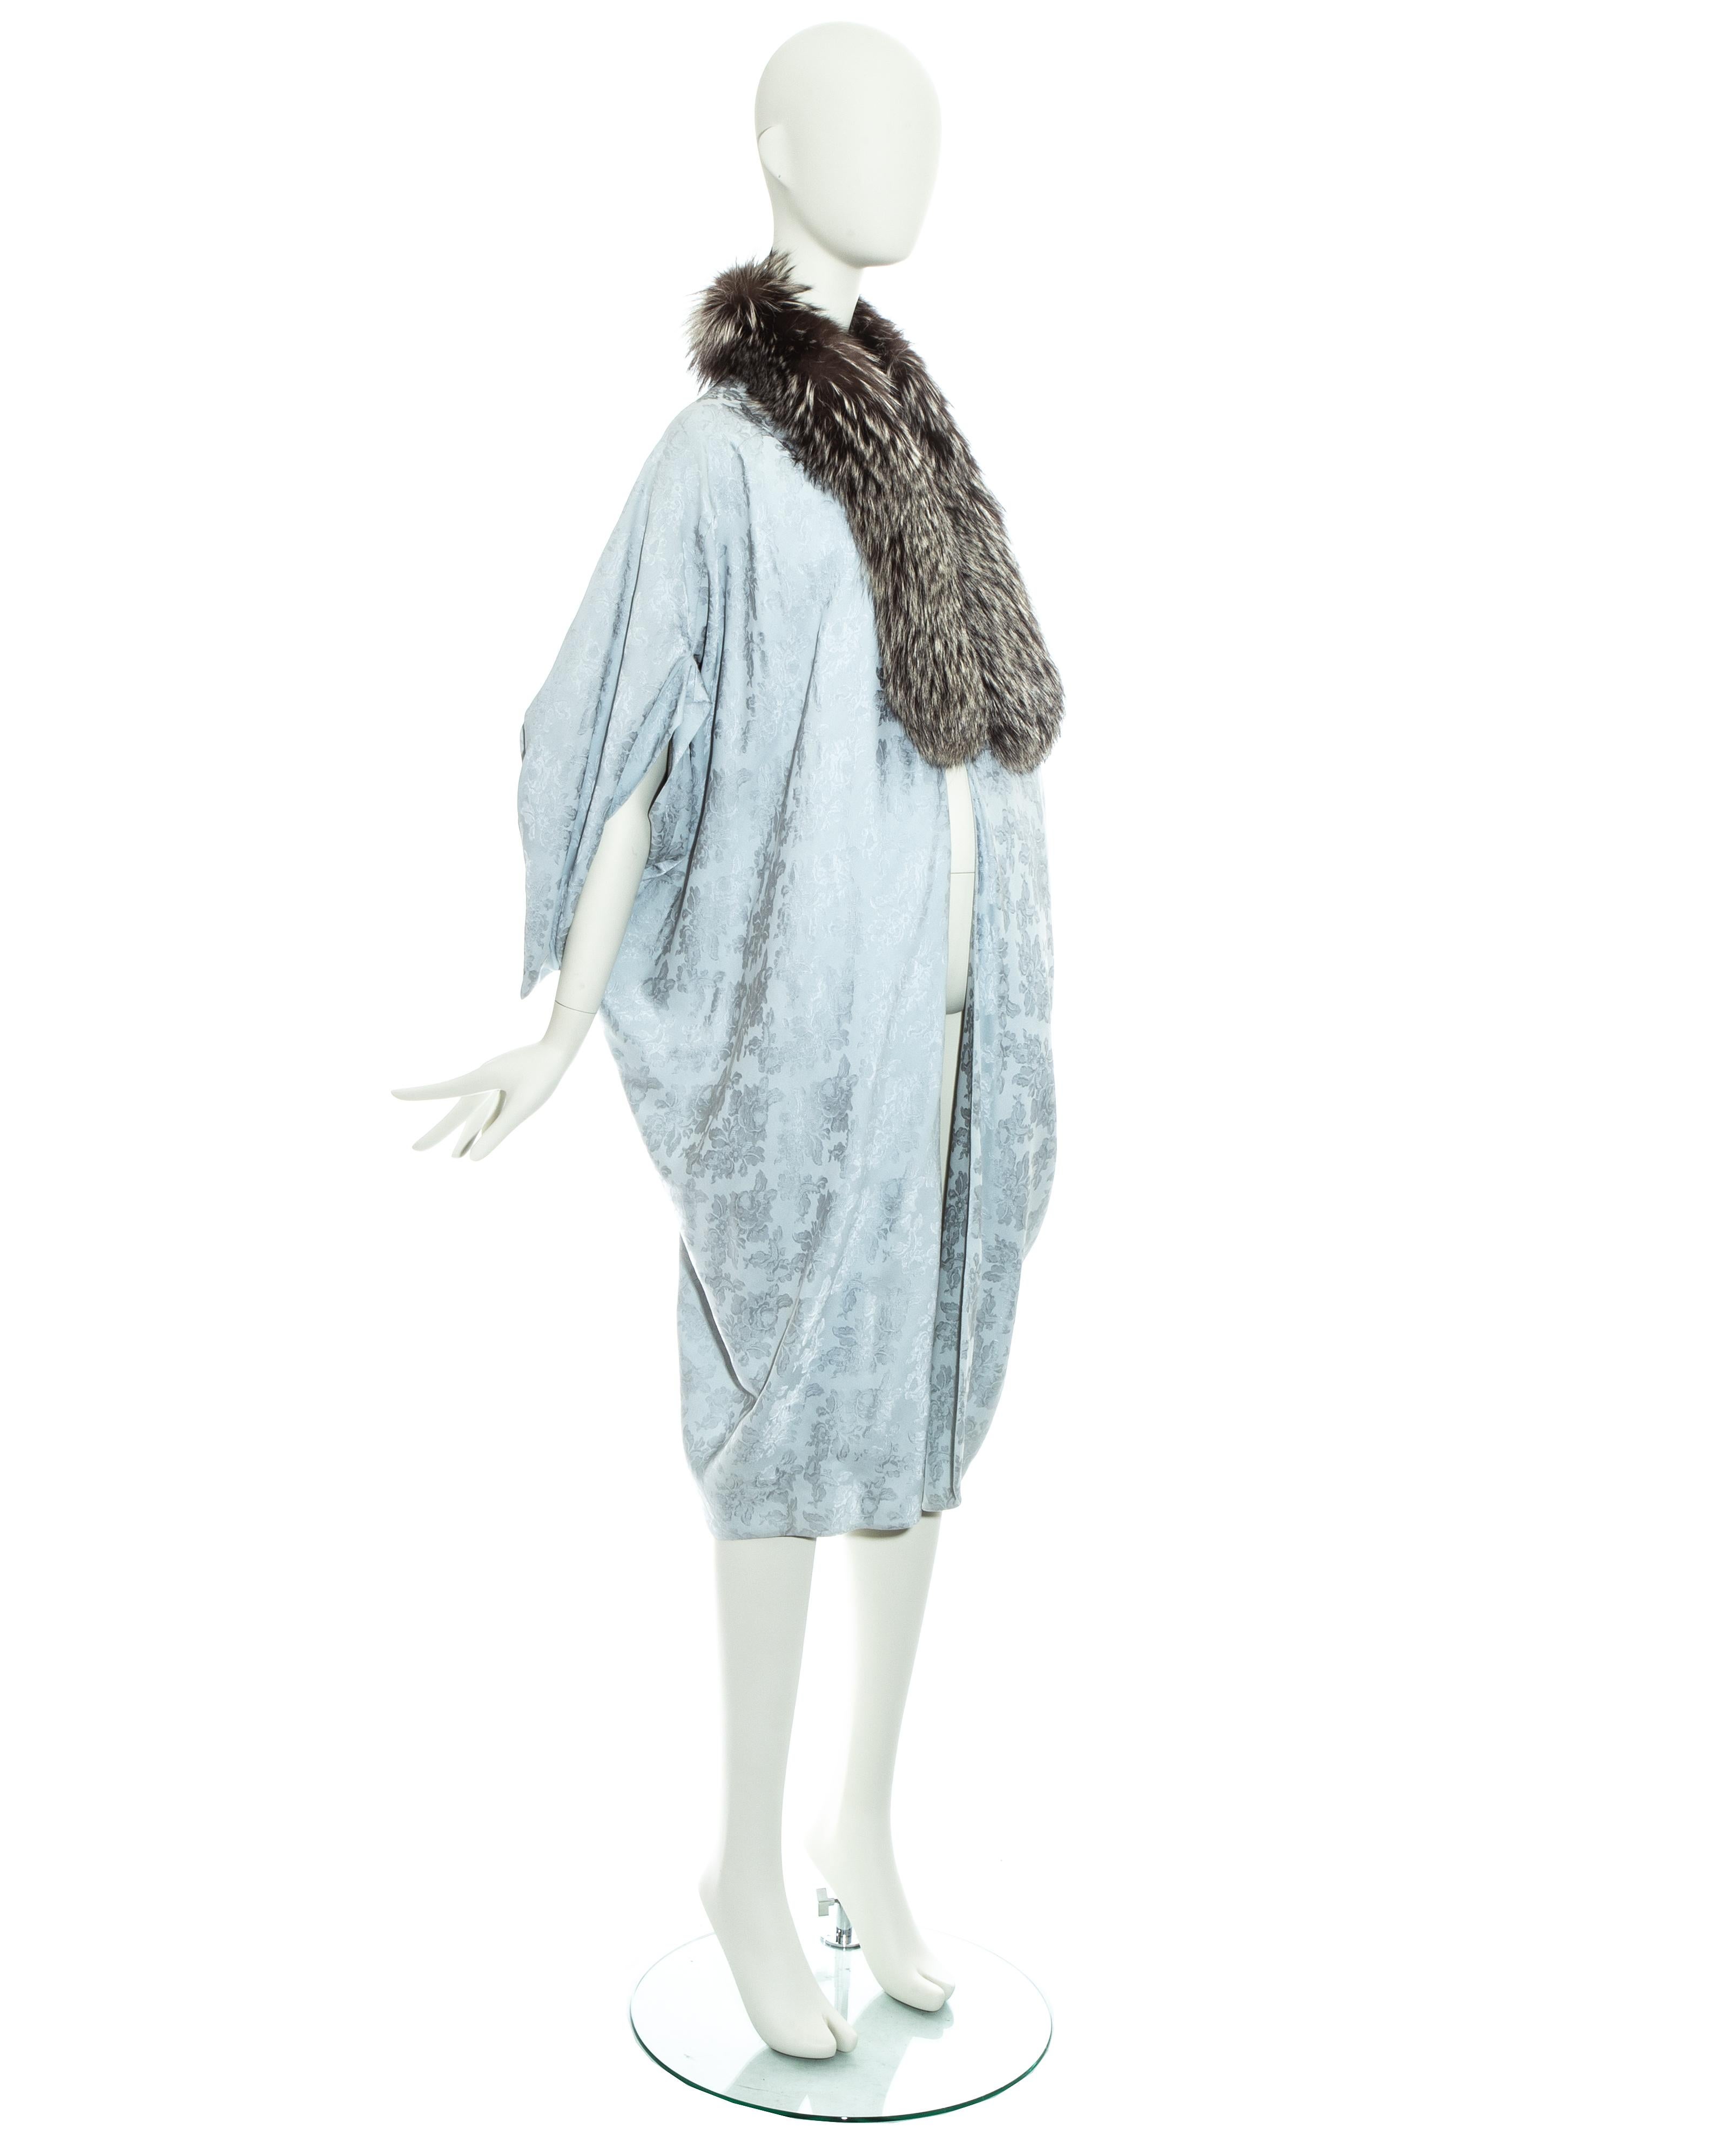 Christian Dior by John Galliano, powder blue silk brocade opera coat with grey fox fur collar 

Fall-Winter 1998